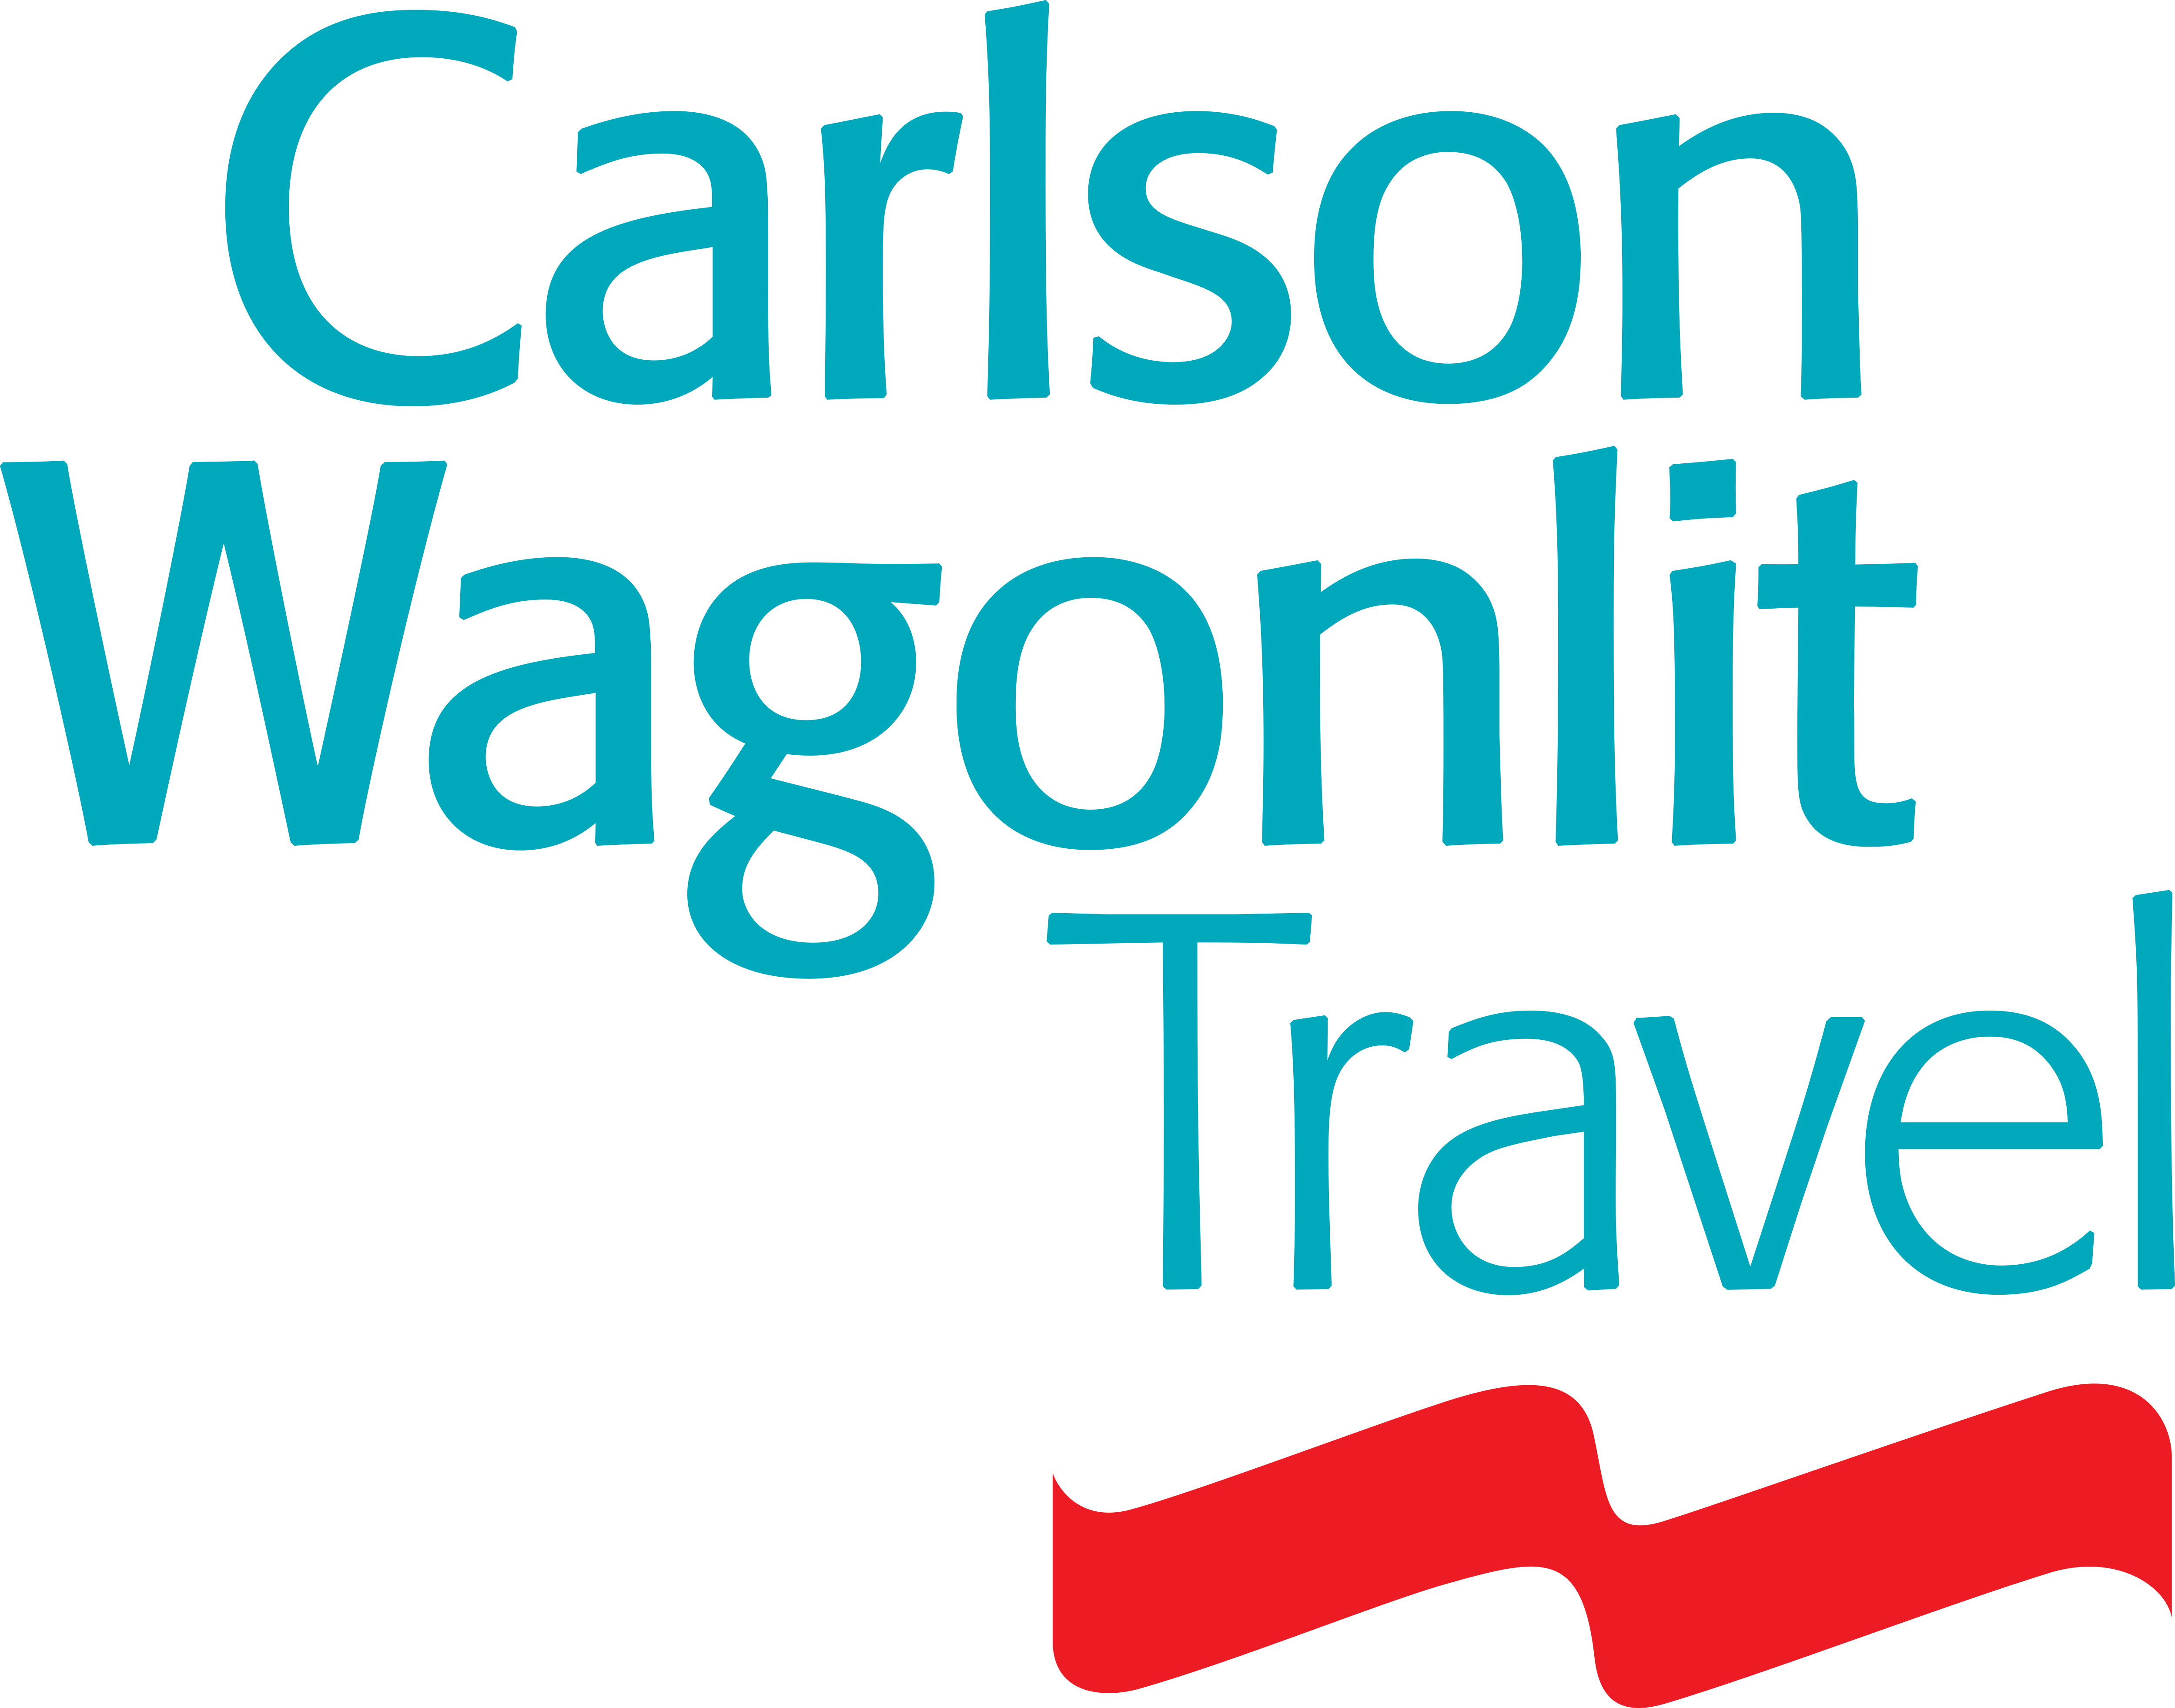 travel management companies carlson wagonlit